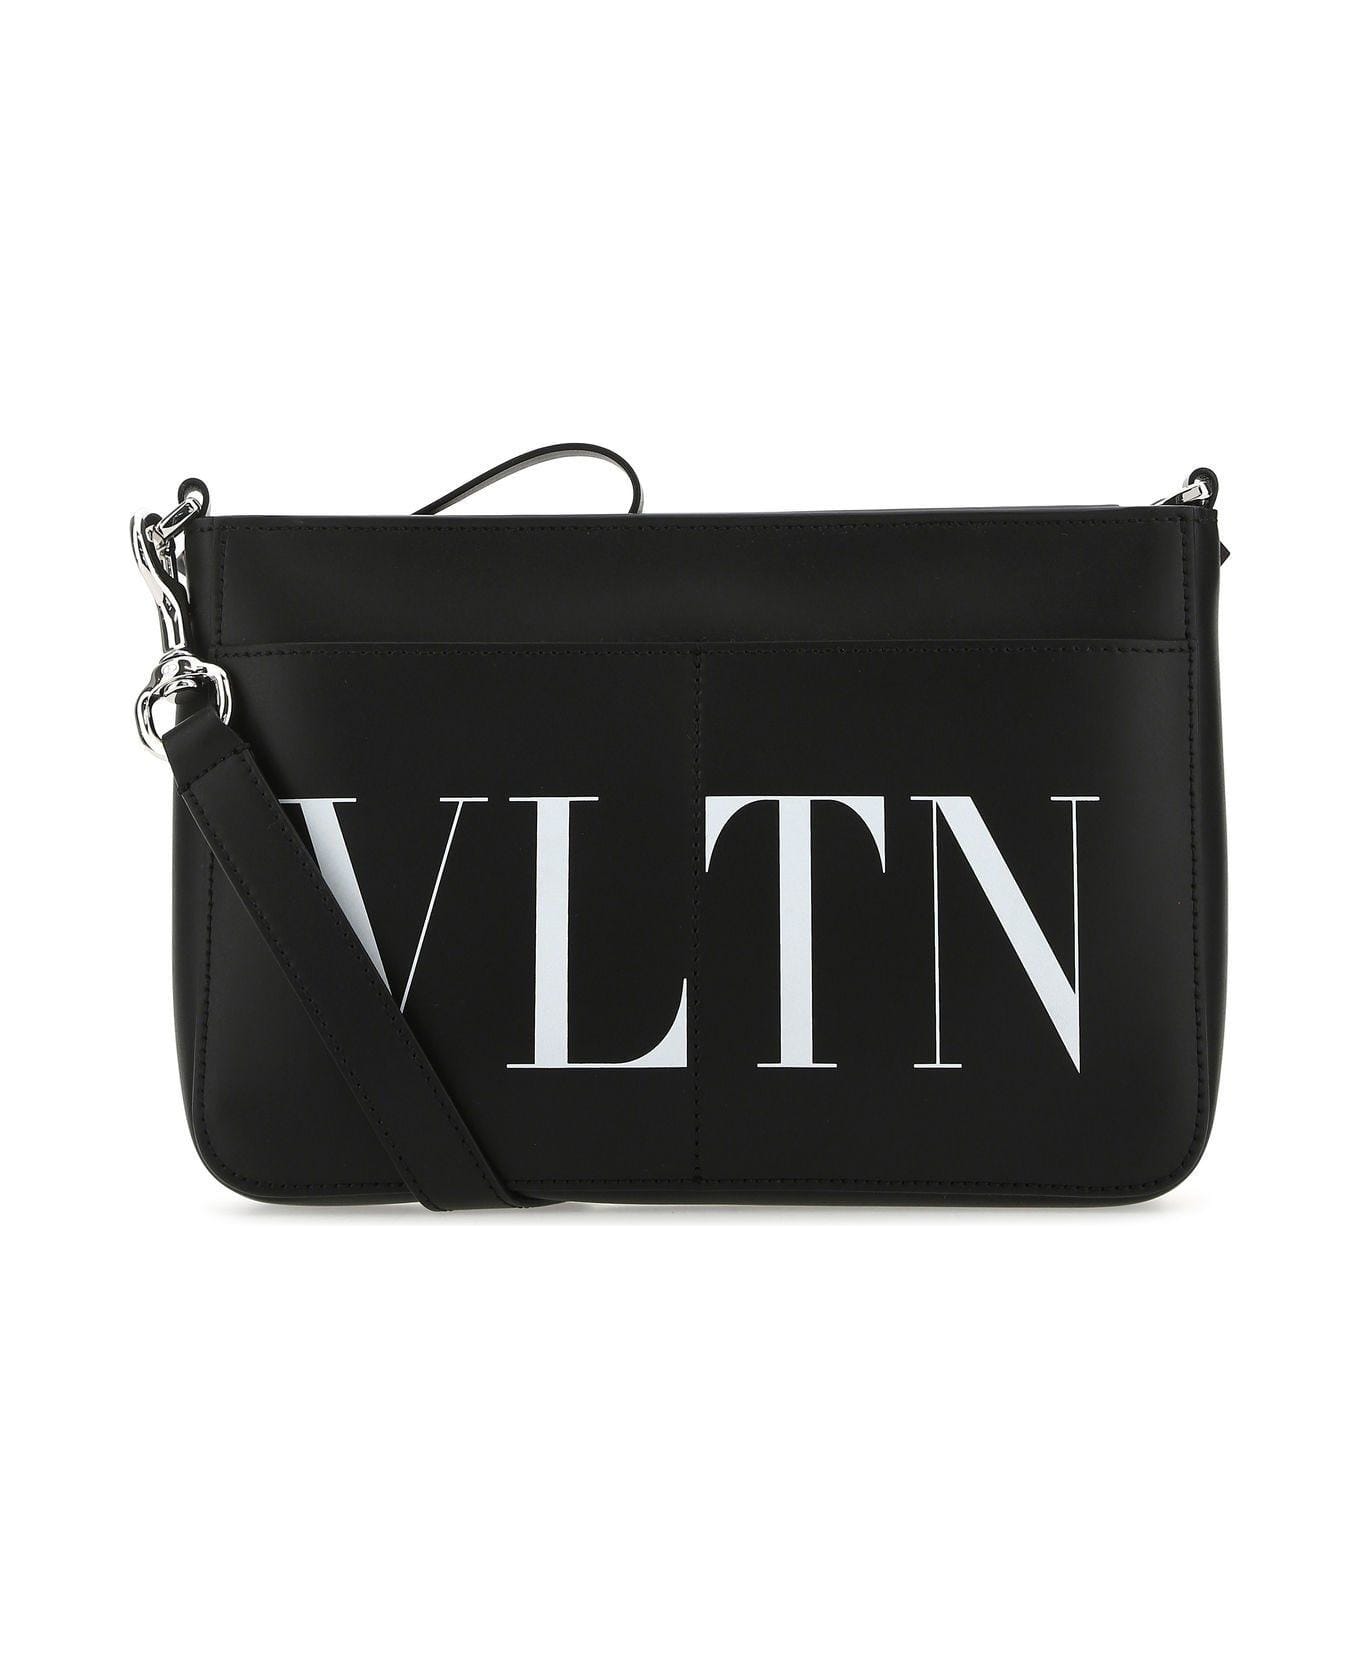 Valentino Garavani Black Leather Crossbody Bag - Nero/bianco